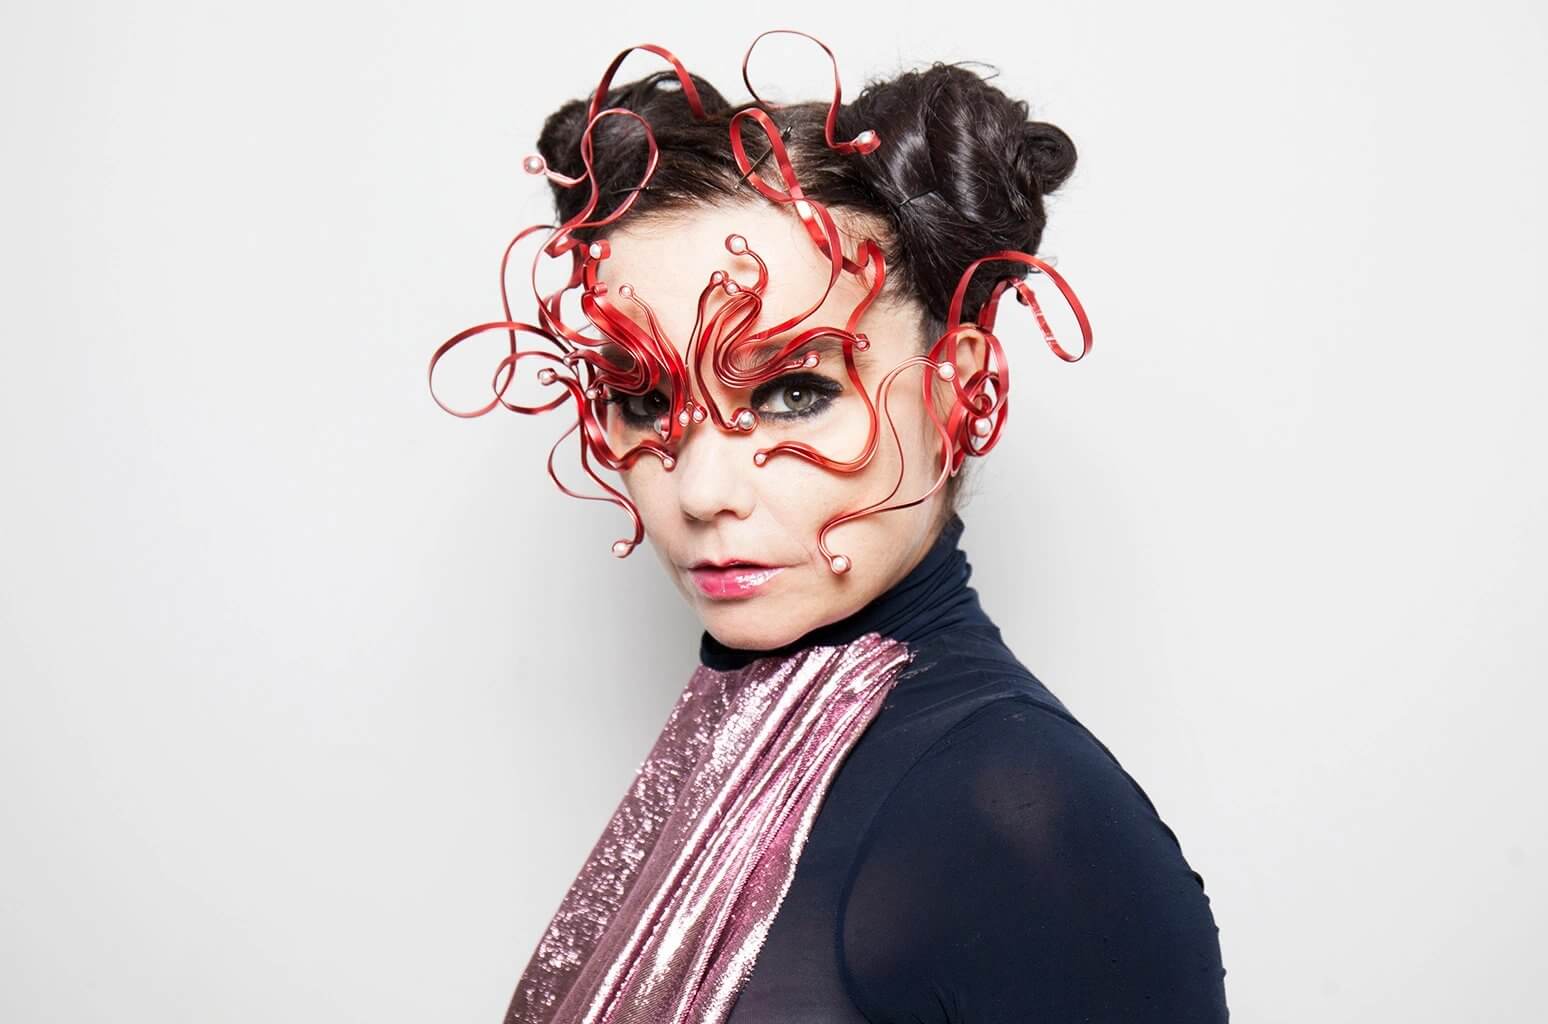 Björk（ビョーク）のプロフィール・バイオグラフィーまとめ